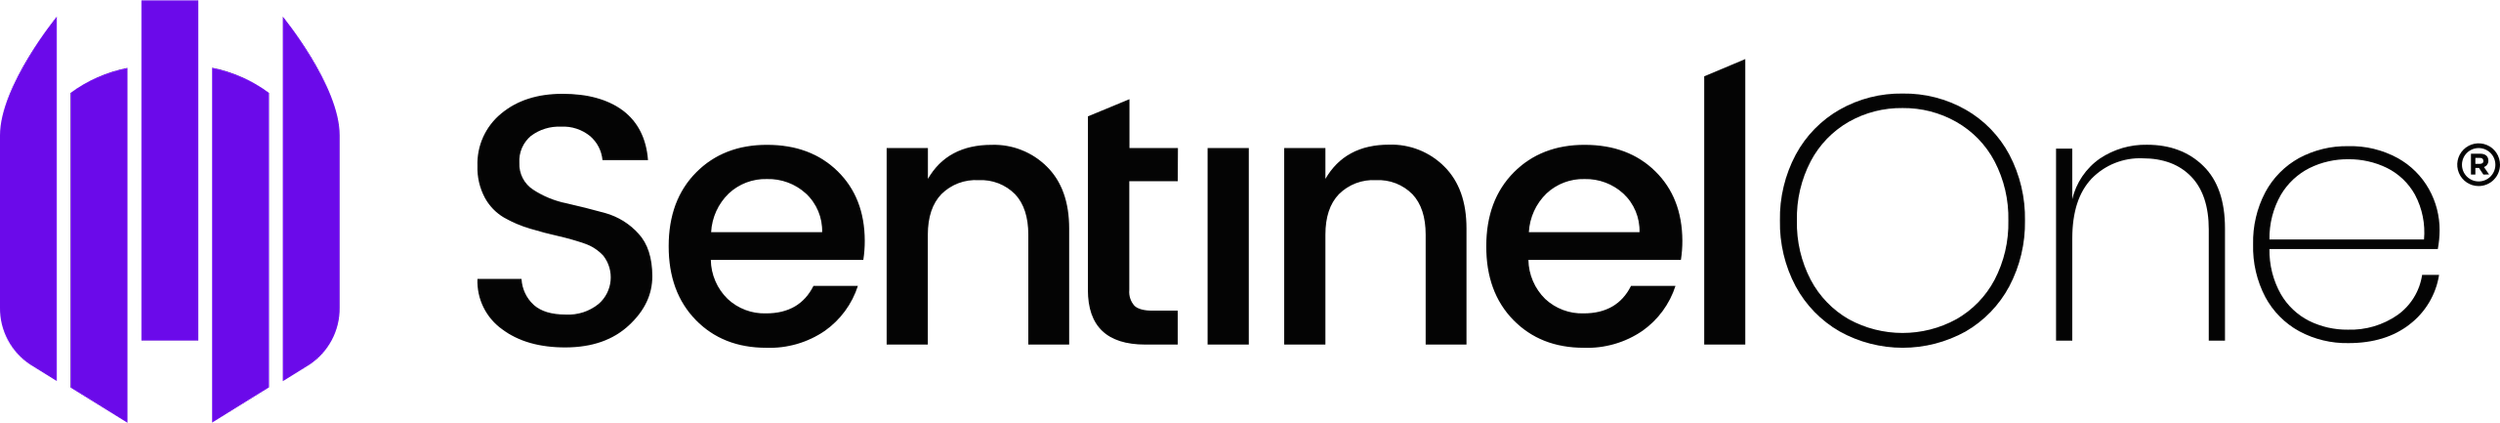 SentinelOne_logo.svg.png